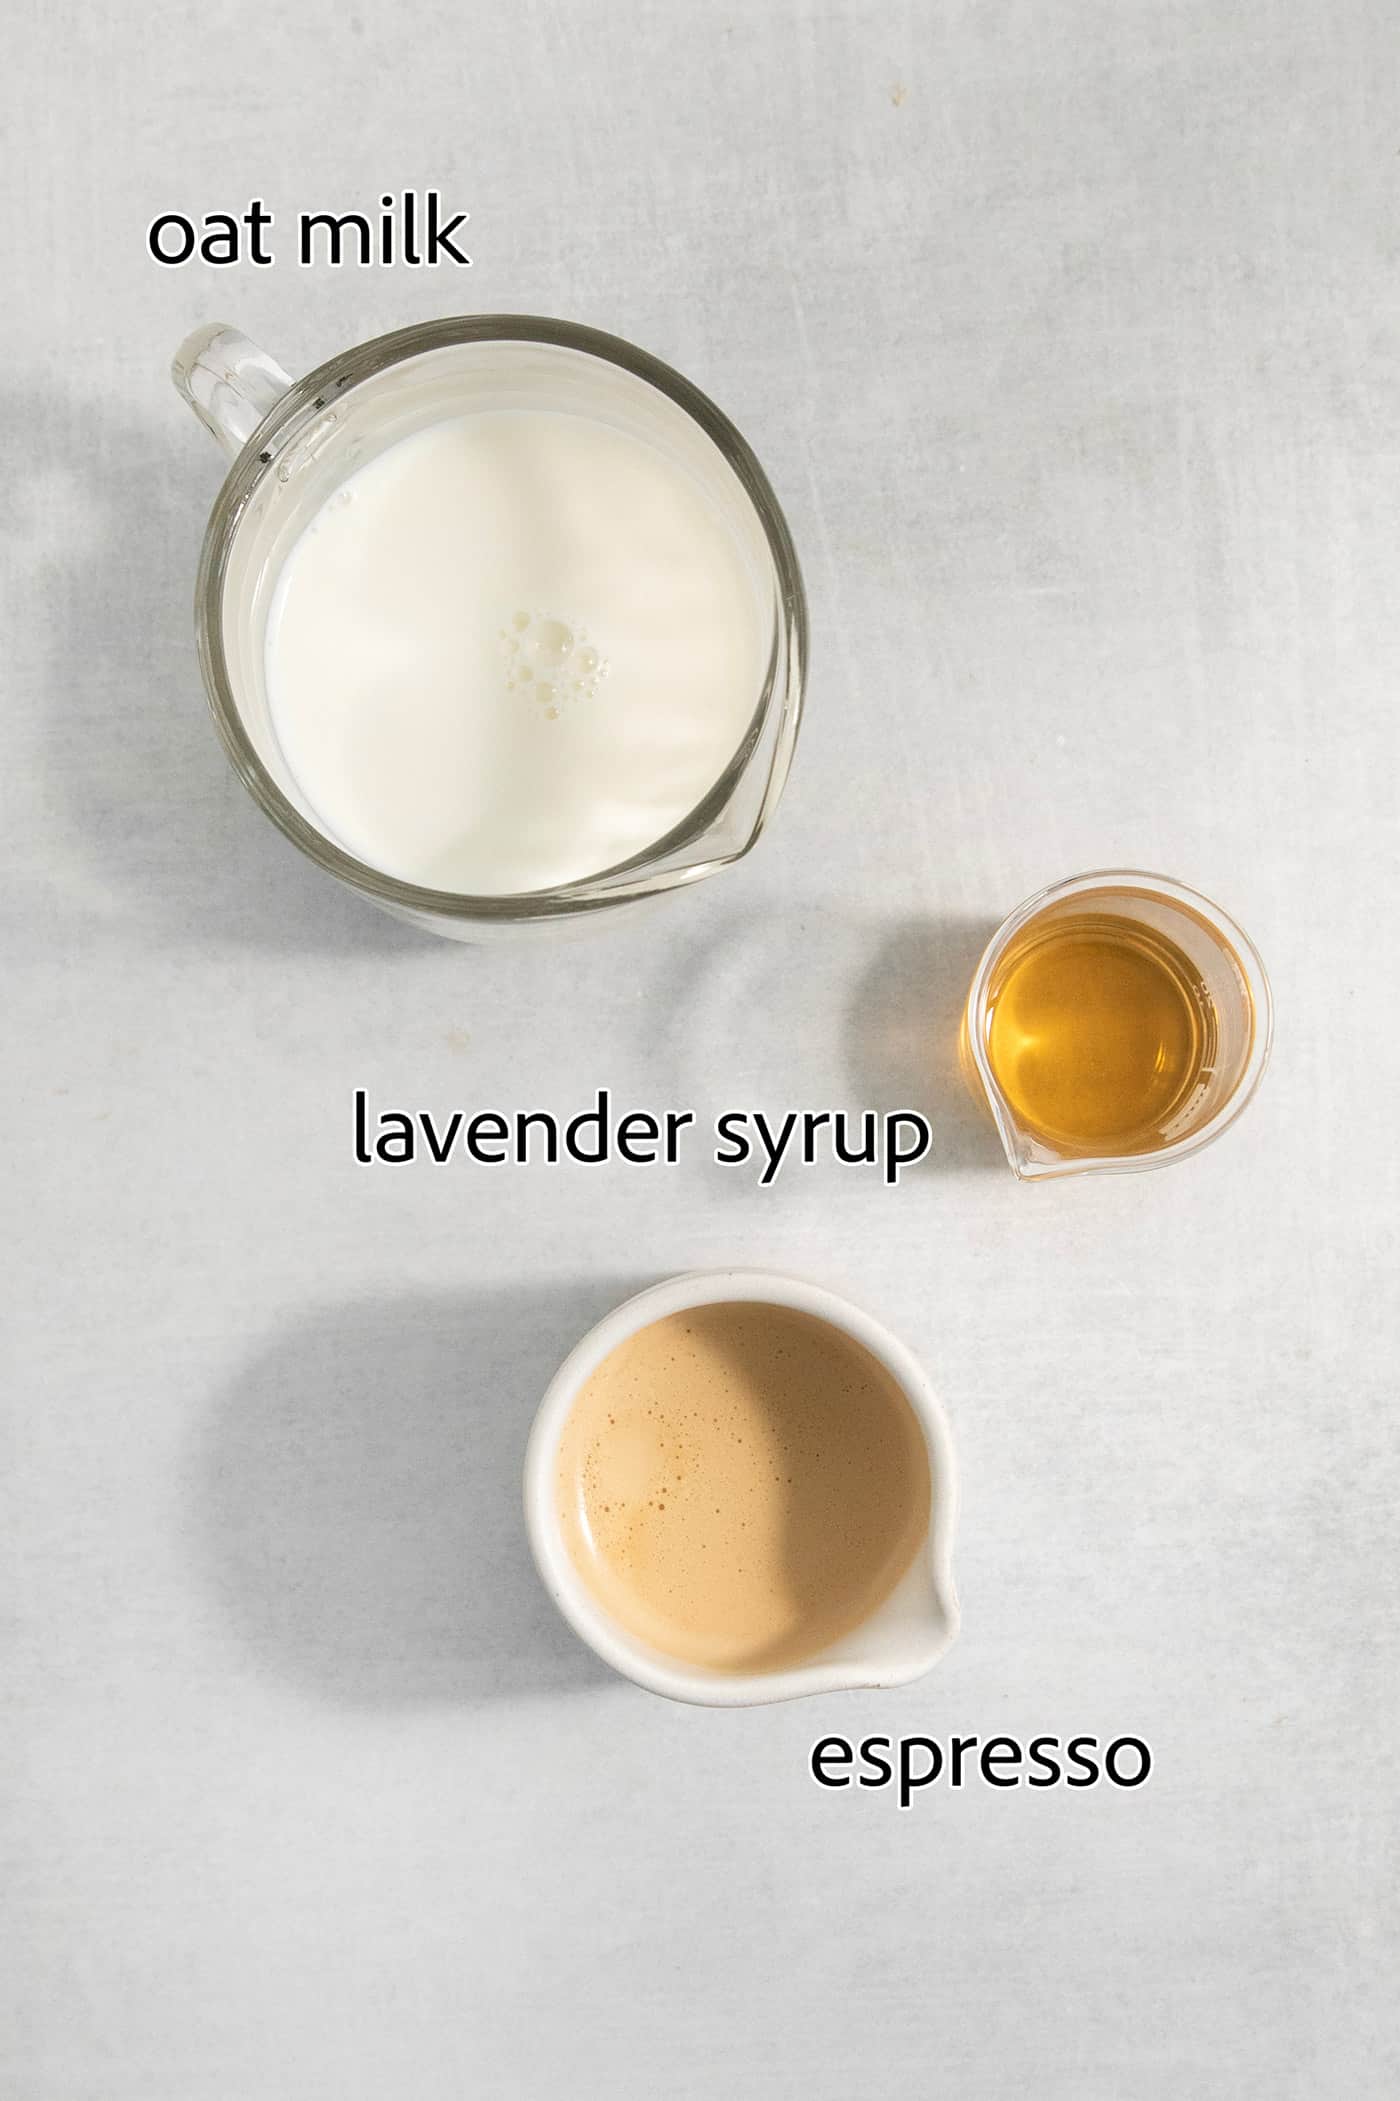 ingredients to make a lavender latte: oat milk, lavender syrup, and espresso